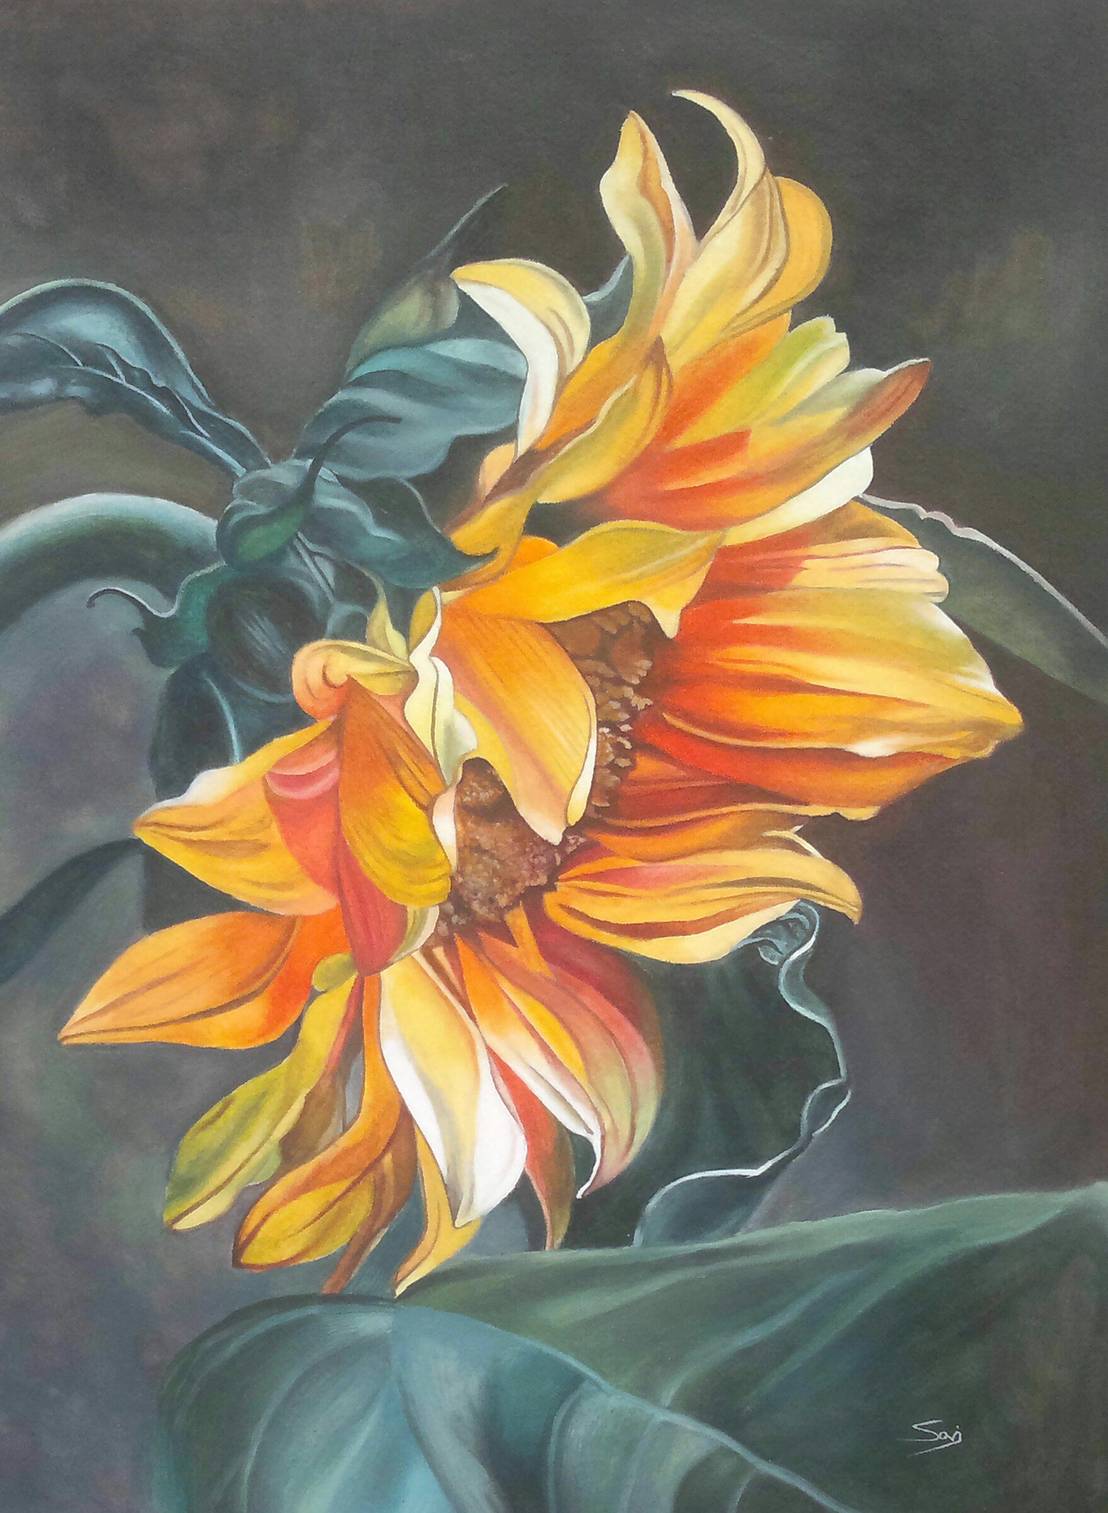 Sunflower Painting Ideas